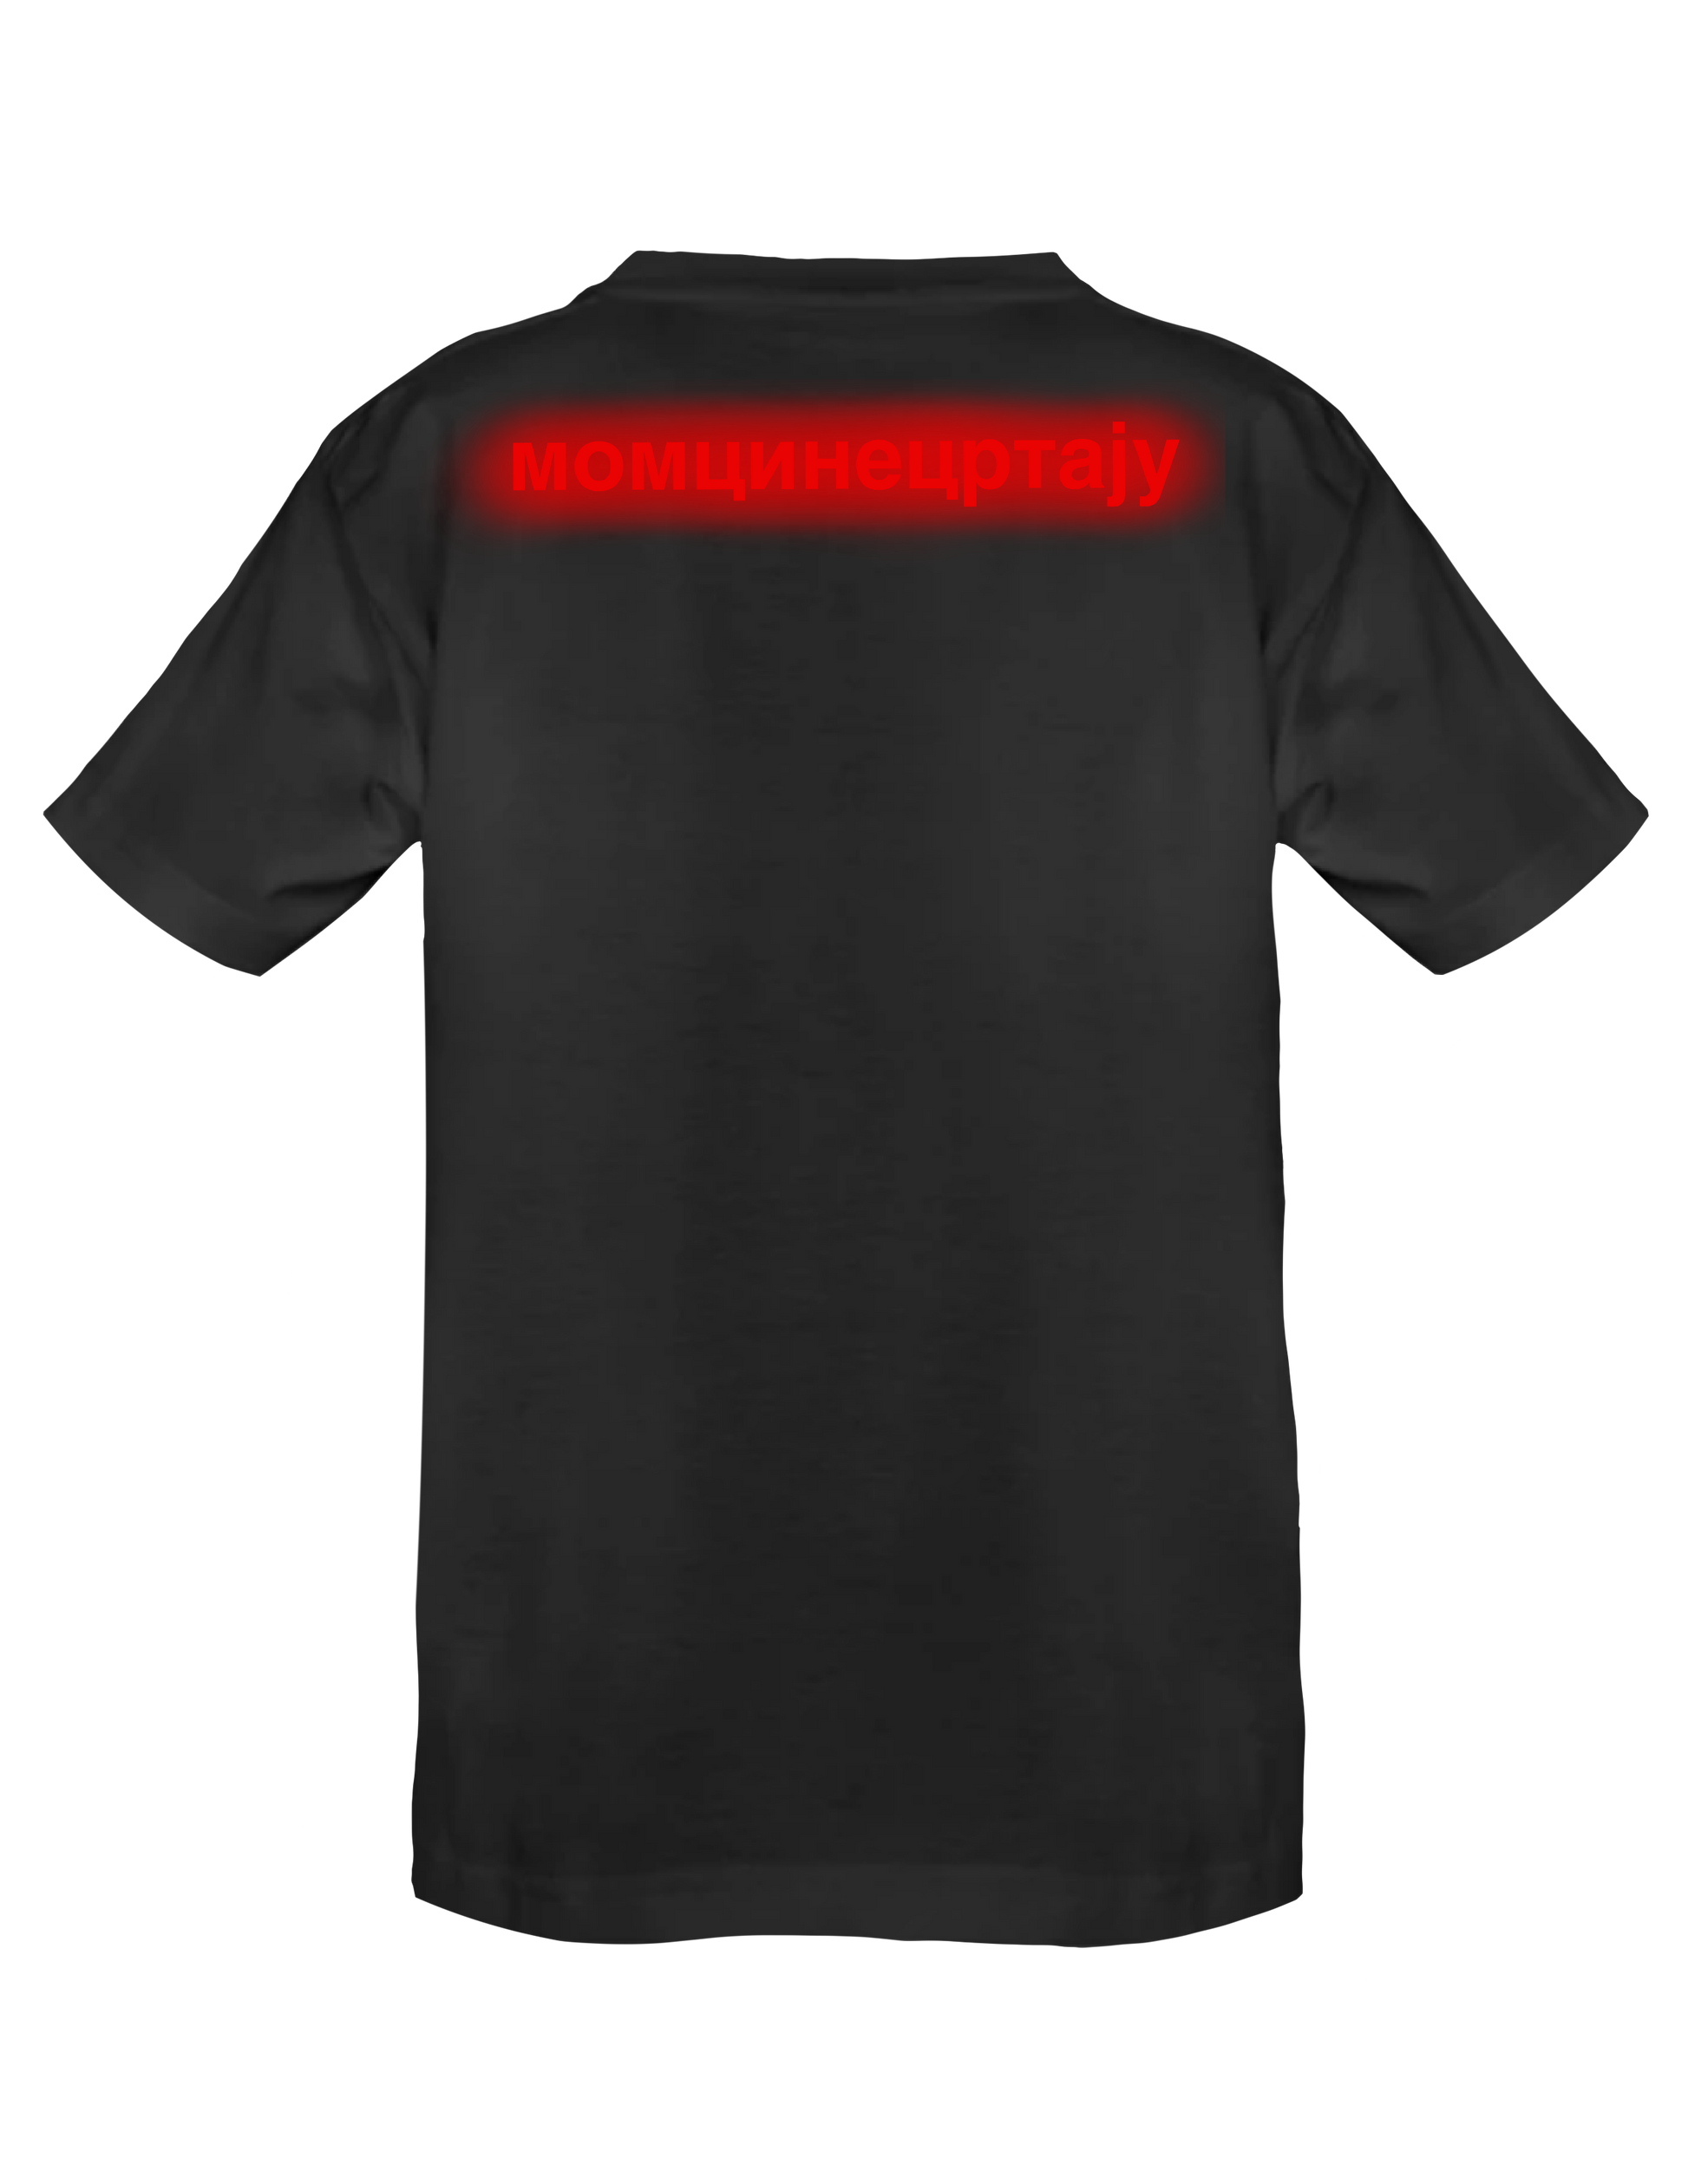 METRO BOOMIN - BOOMLANDER* (Black) - T-Shirt by BOYSDONTDRAW